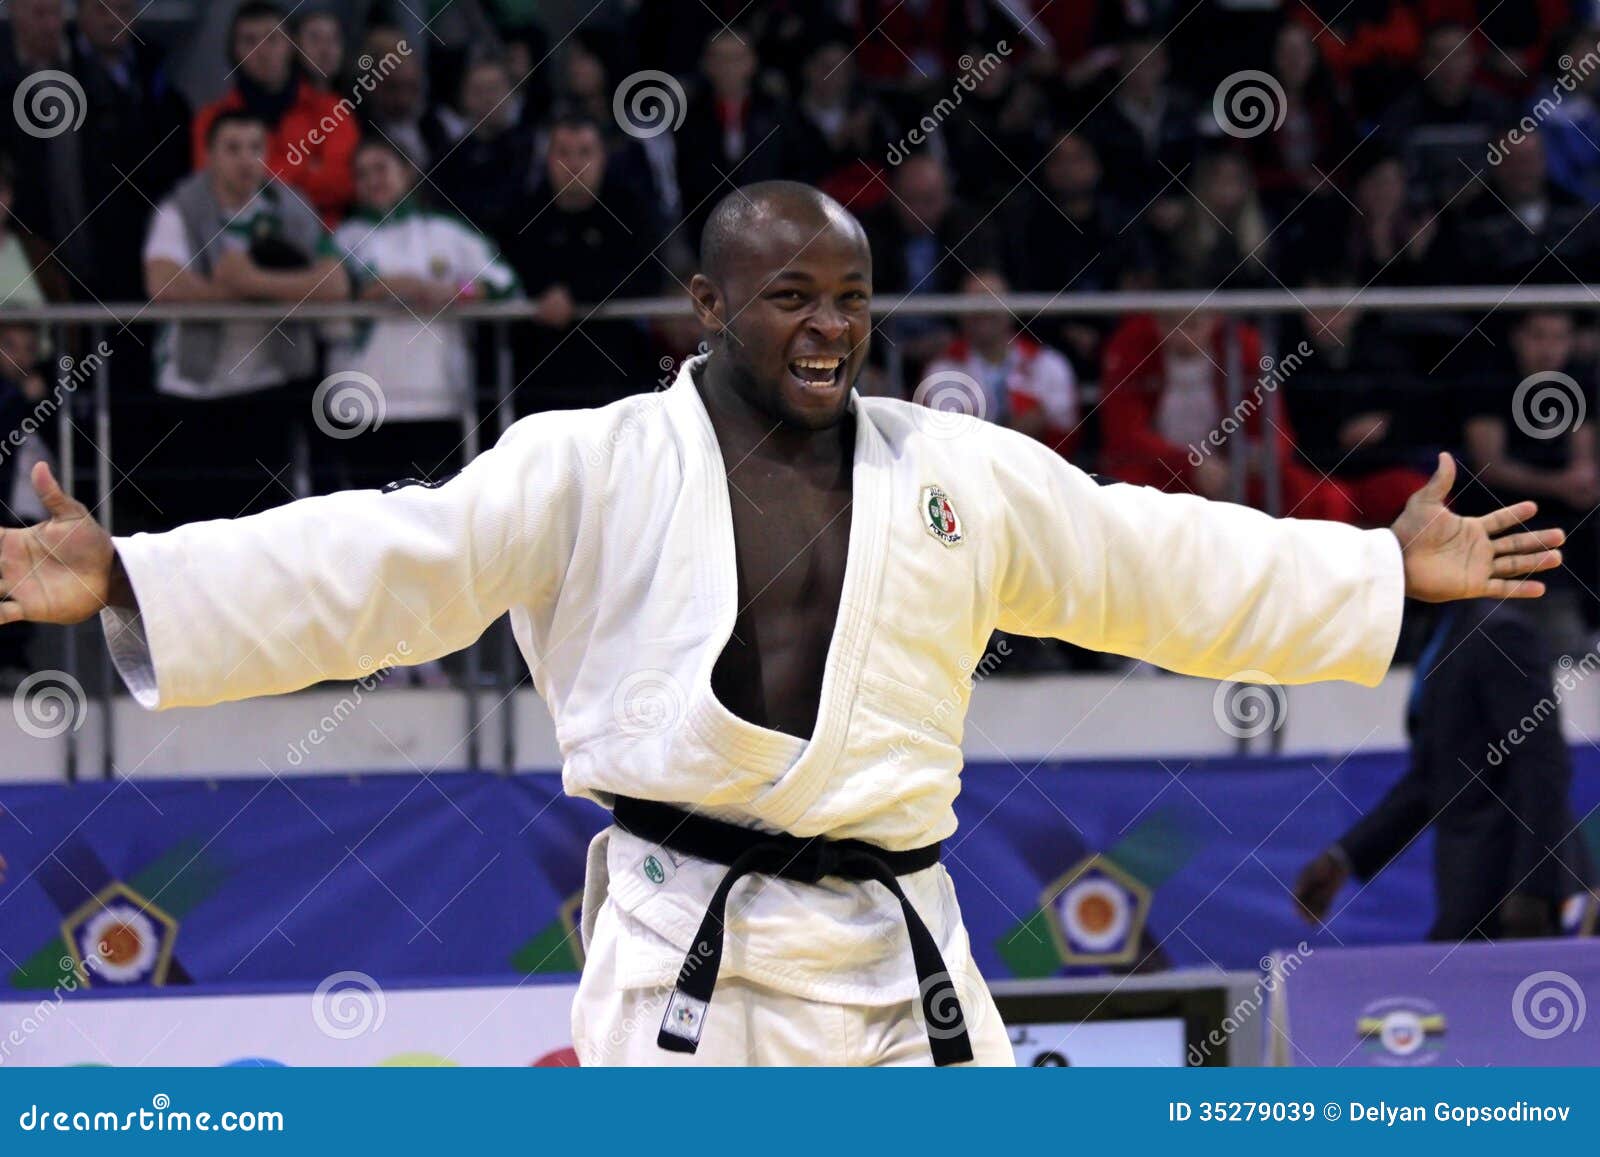 European Judo Championships 2013 Editorial Stock Image